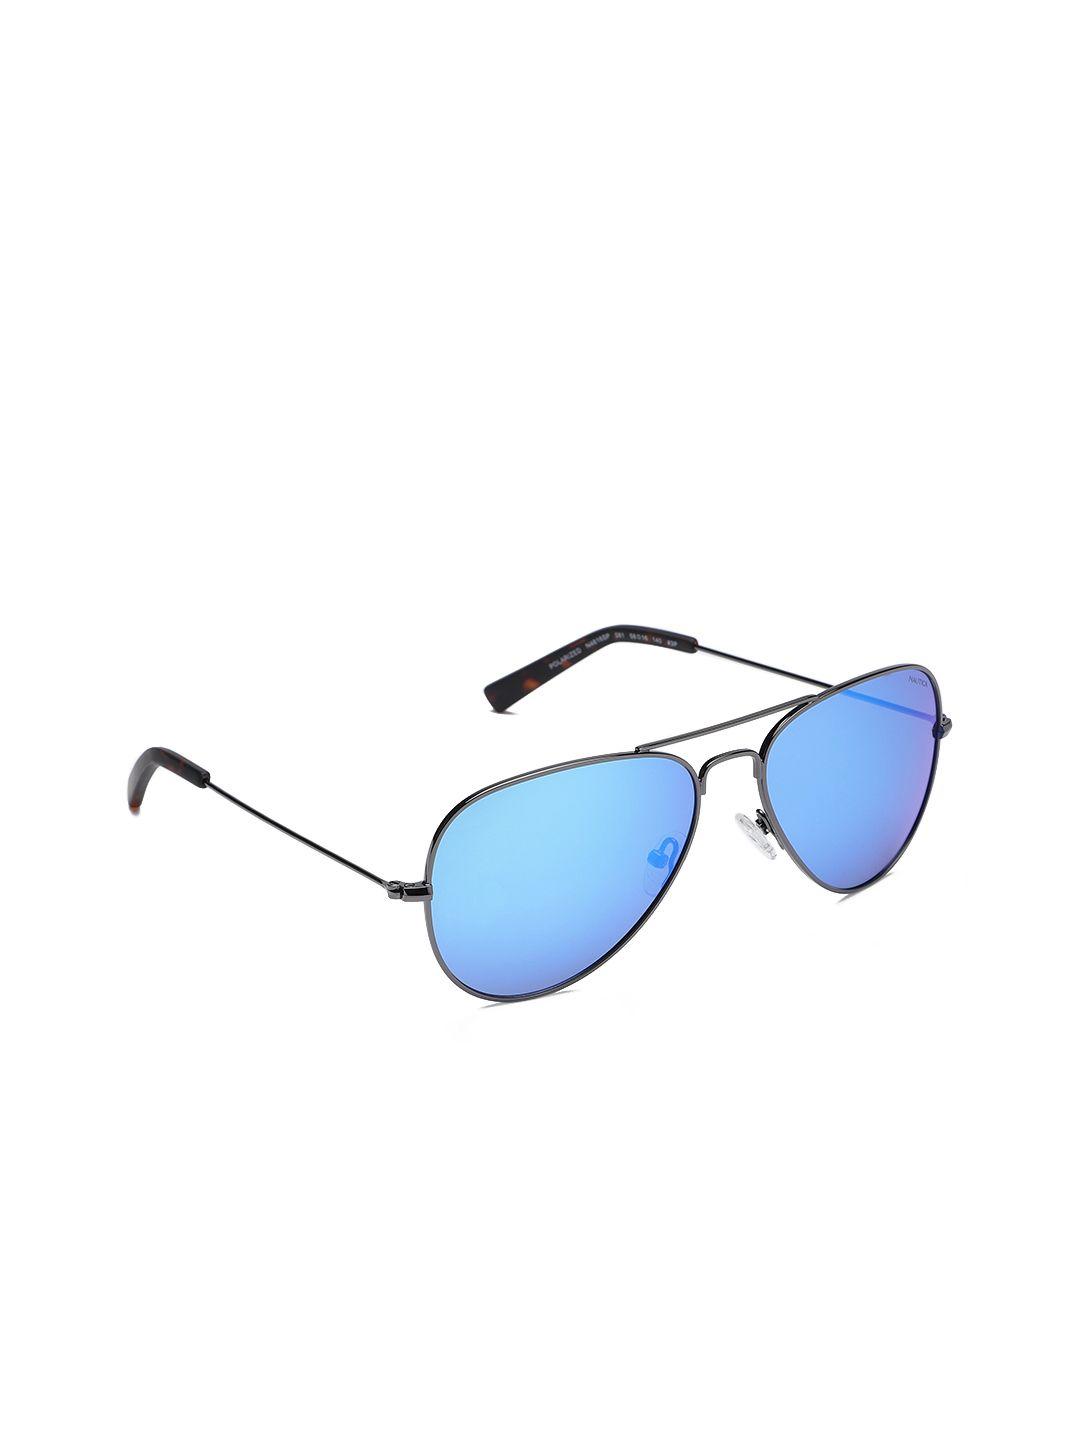 nautica men aviator sunglasses 4616p 081 58 s